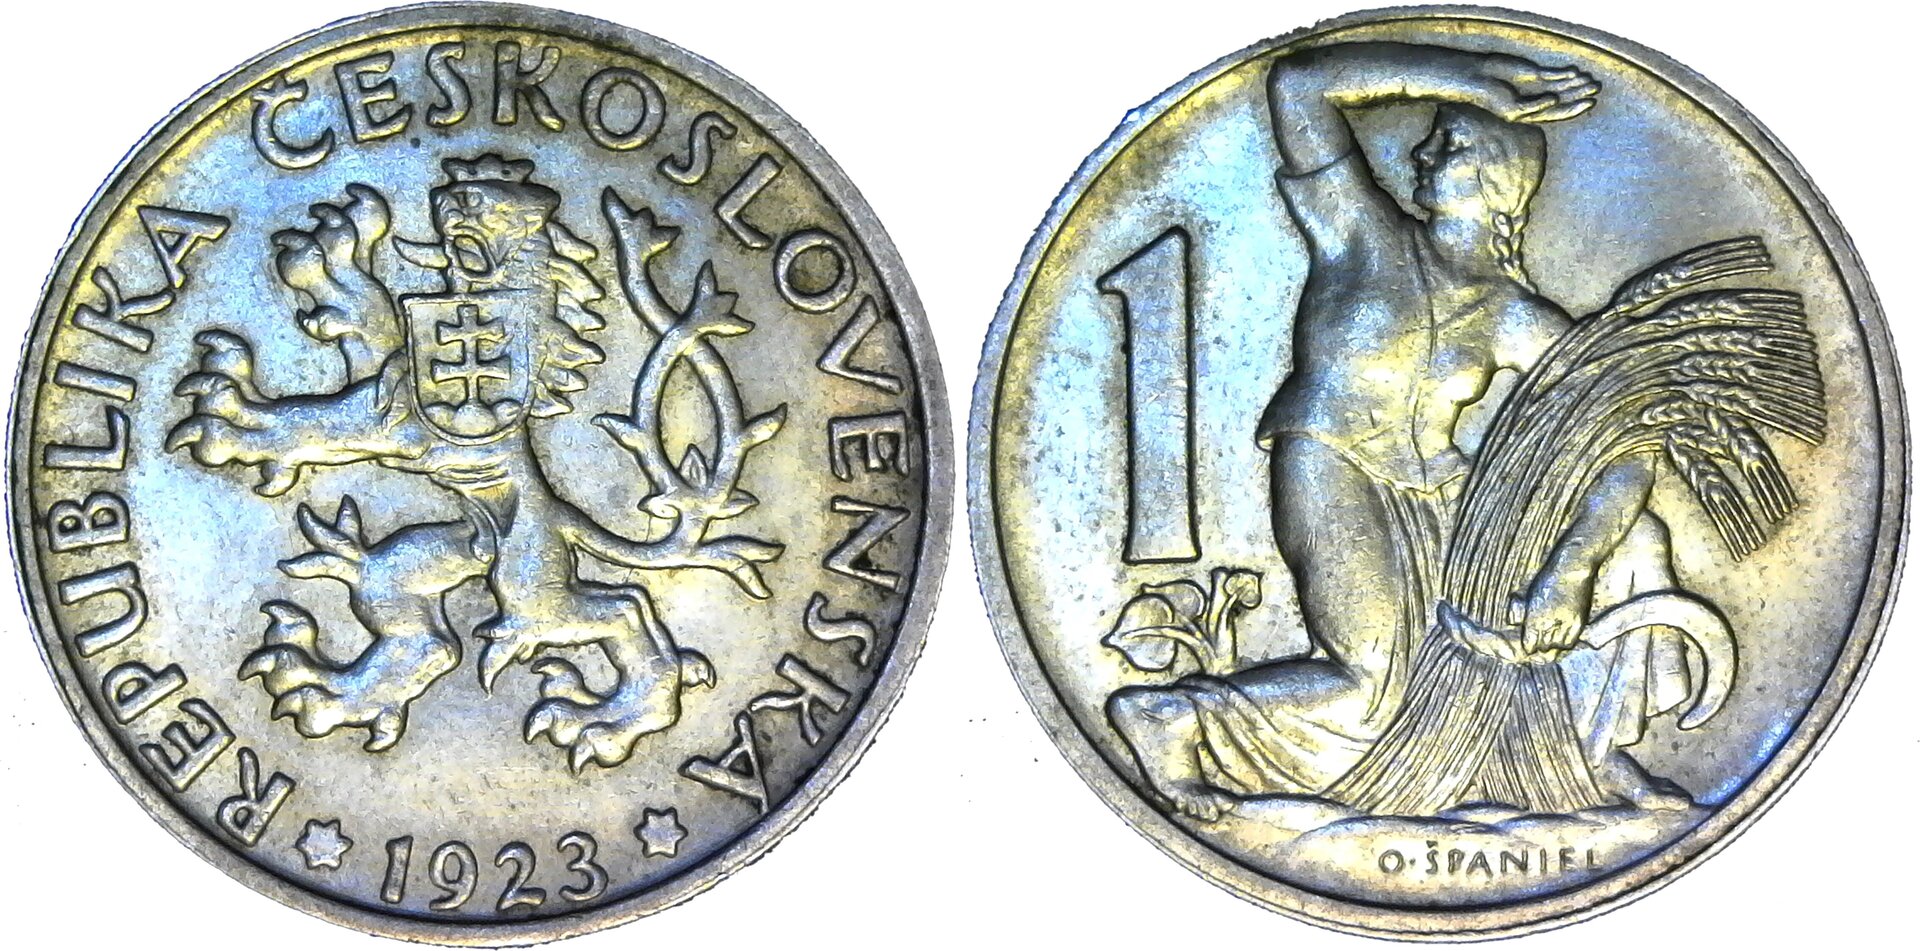 Czechoslovakia 1 Koruna  1923 obv-side-cutout.jpg